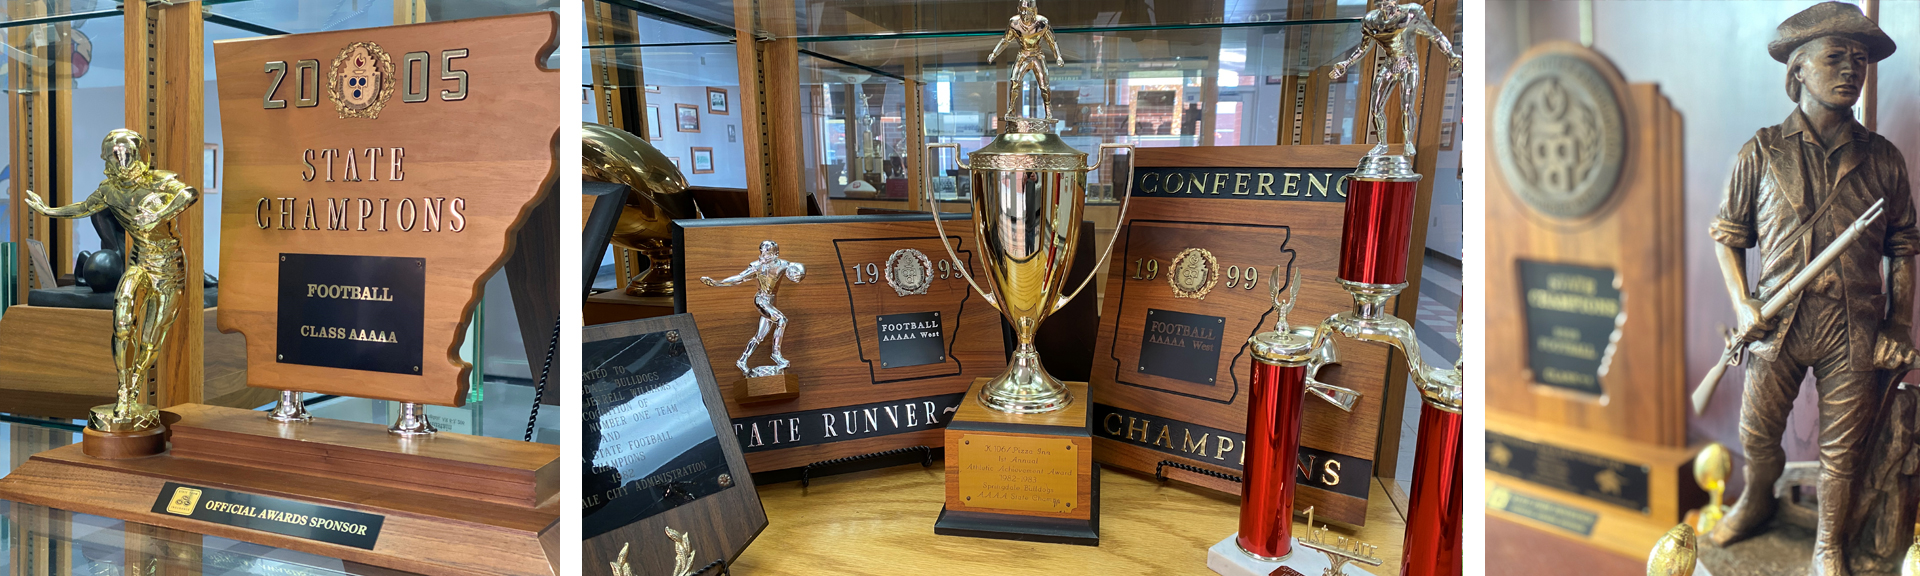 Springdale Athletics Trophies and Accomplishments